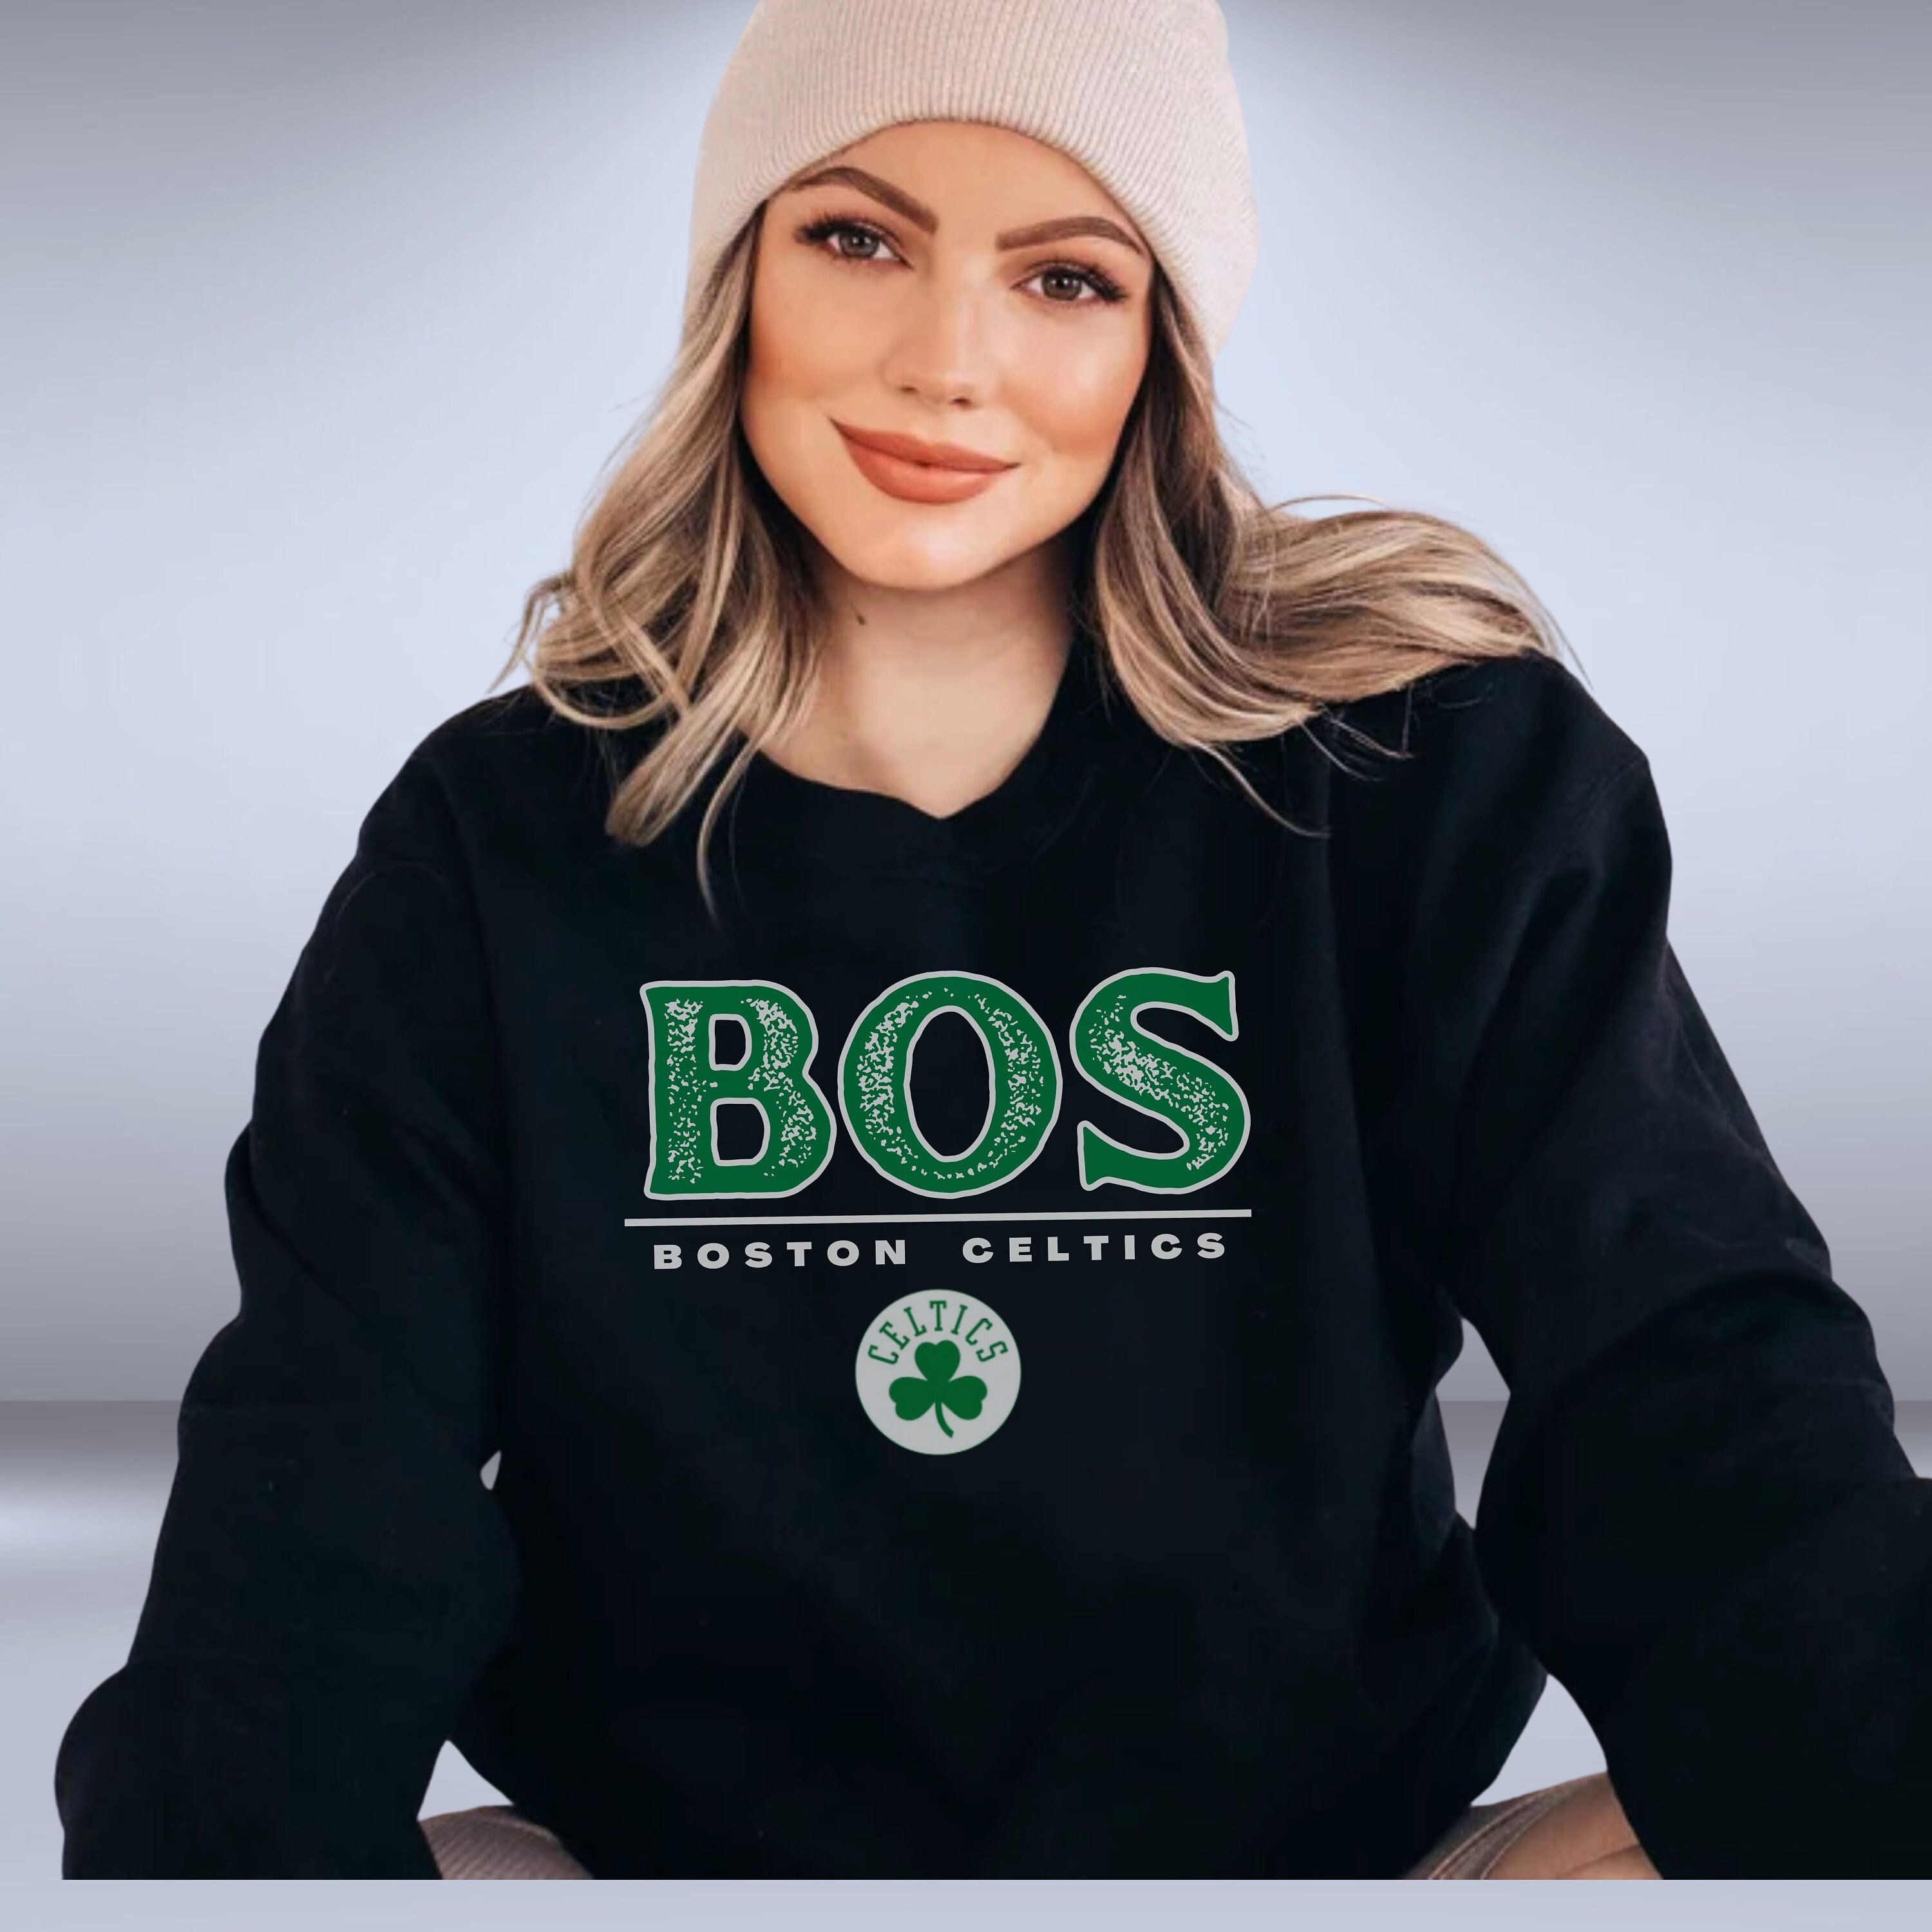 FREE shipping Real Women love basketball smart women love the Boston  Celtics shirt, Unisex tee, hoodie, sweater, v-neck and tank top